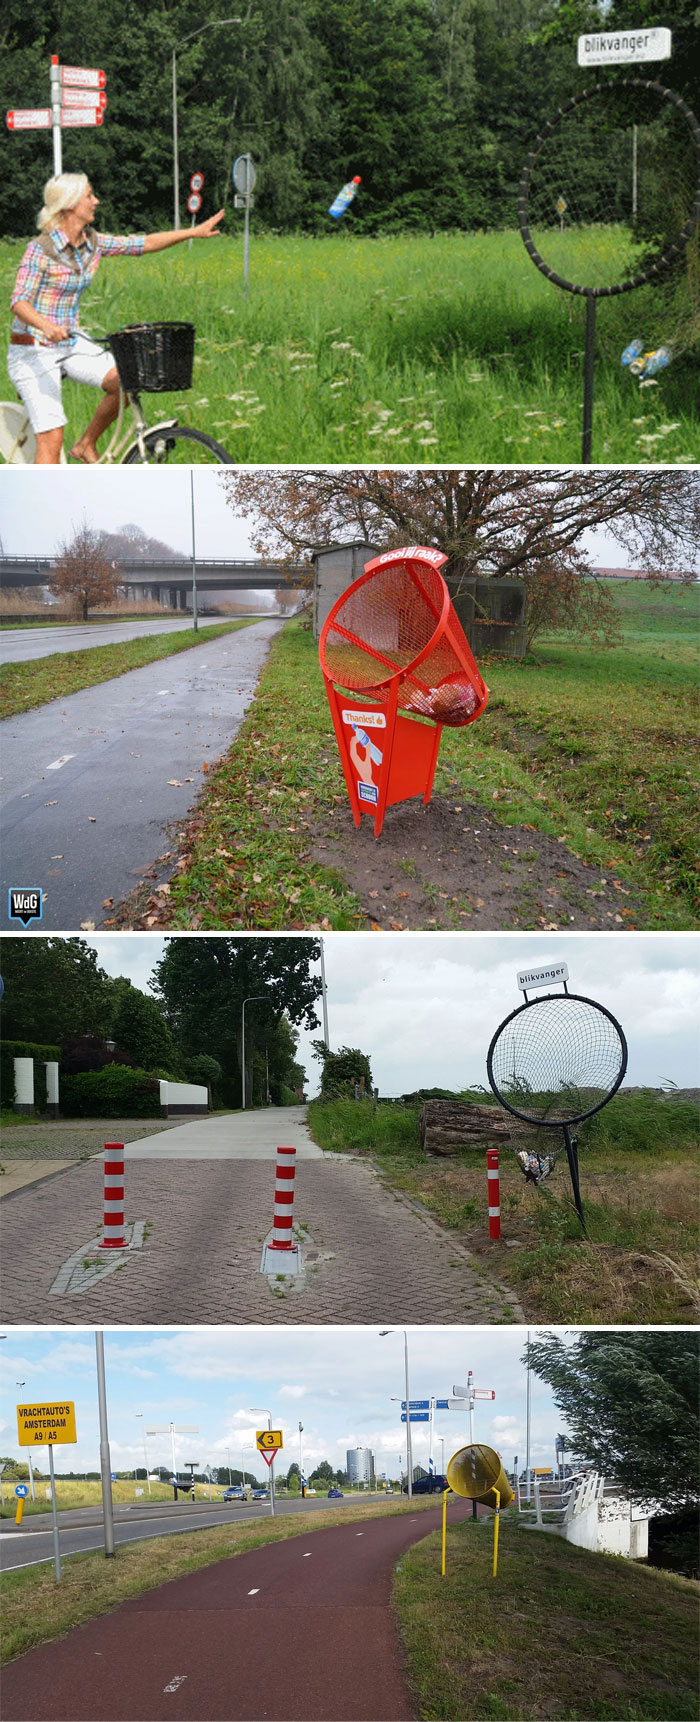 Trash Cans For Cyclists (Blikvanger), Netherlands